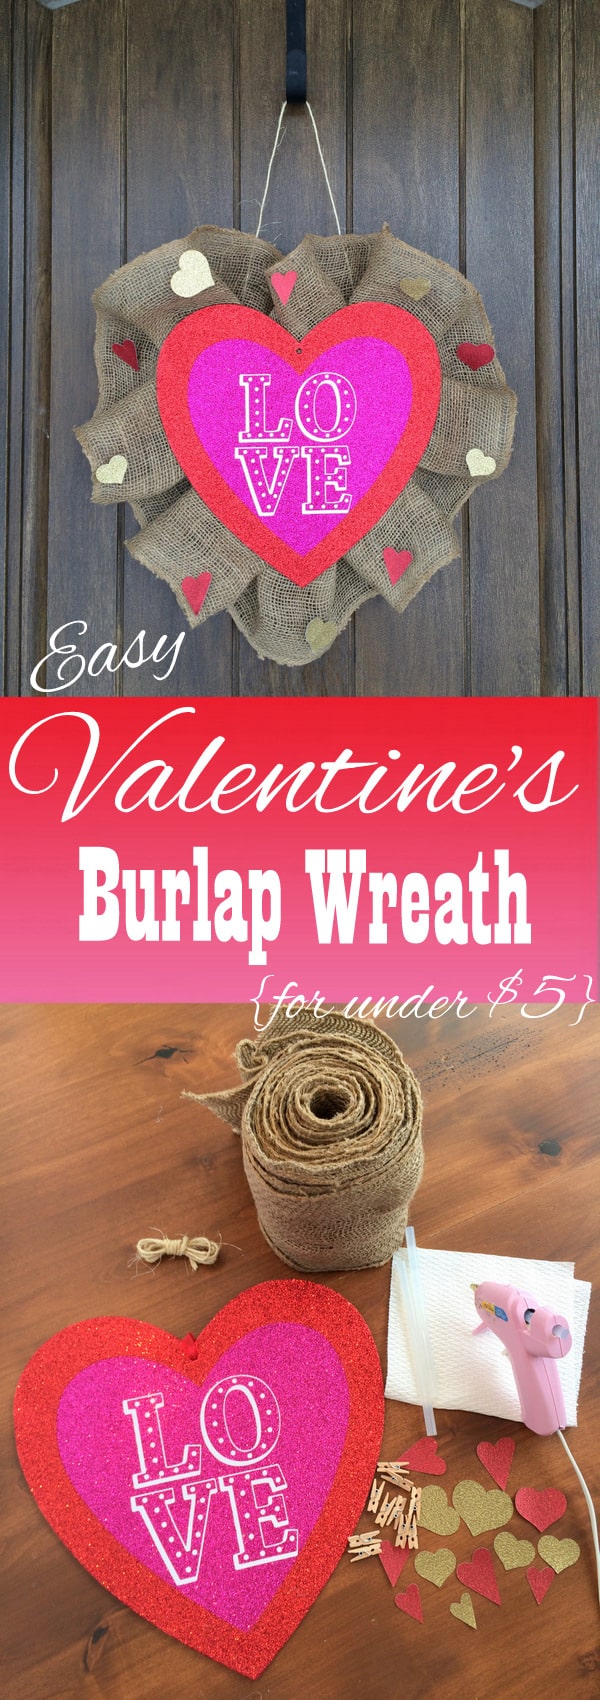 Easy Valentine's Glitter Heart Burlap Wreath Under Five Dollars | KitchenCents.com